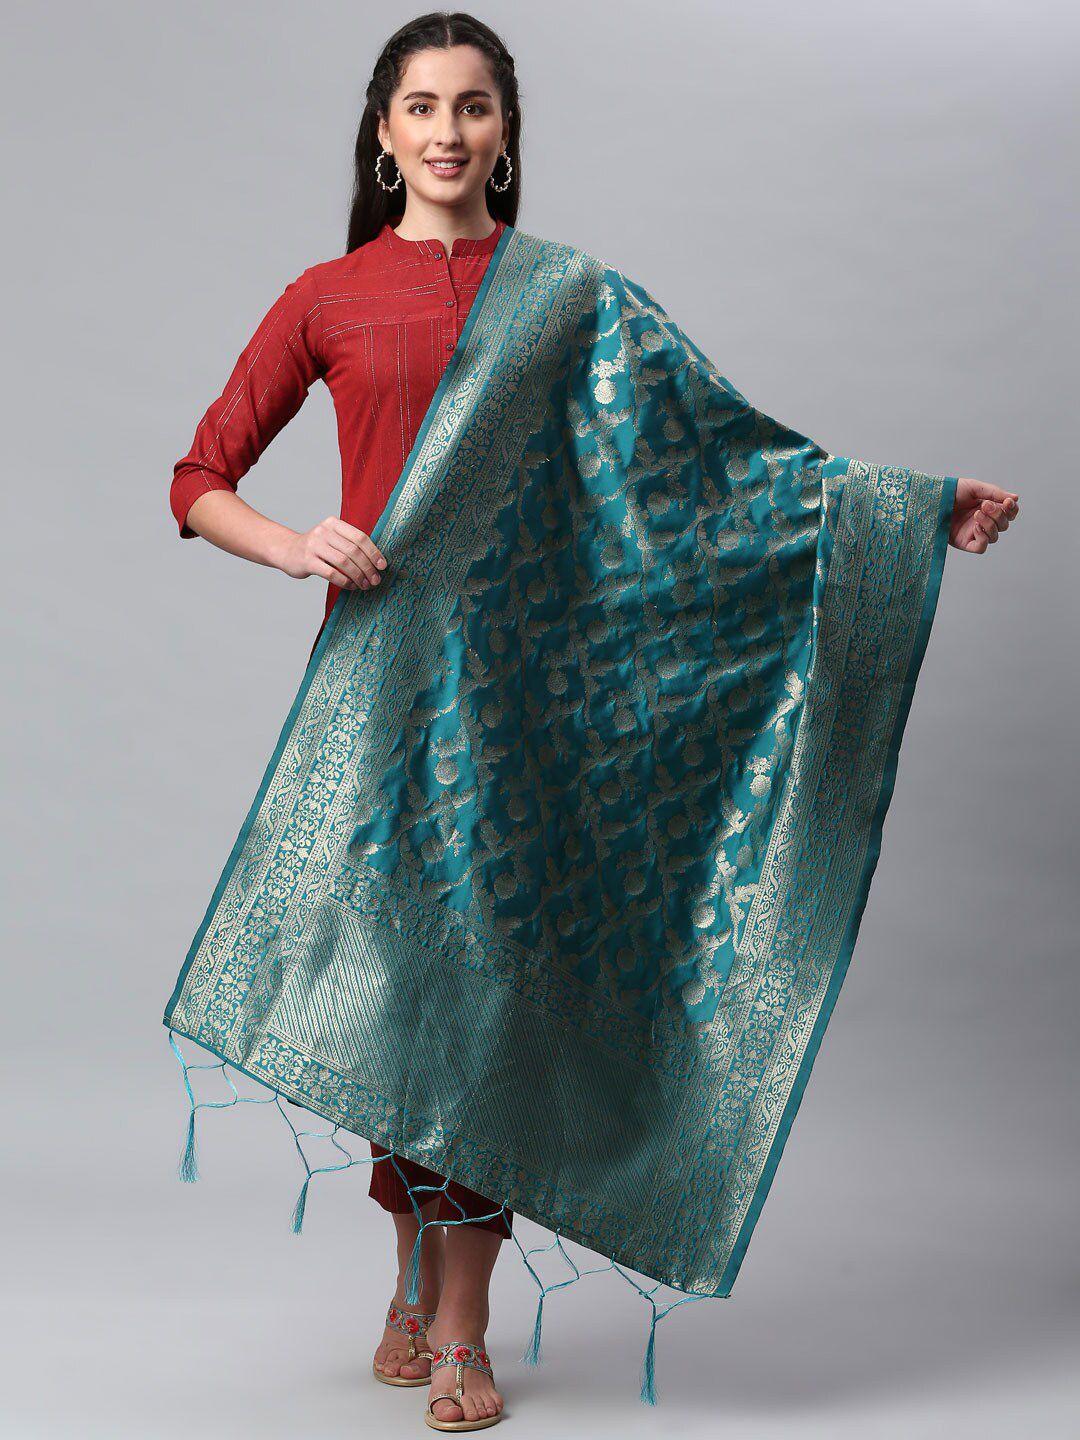 lilots turquoise blue & gold-toned ethnic motifs woven design dupatta